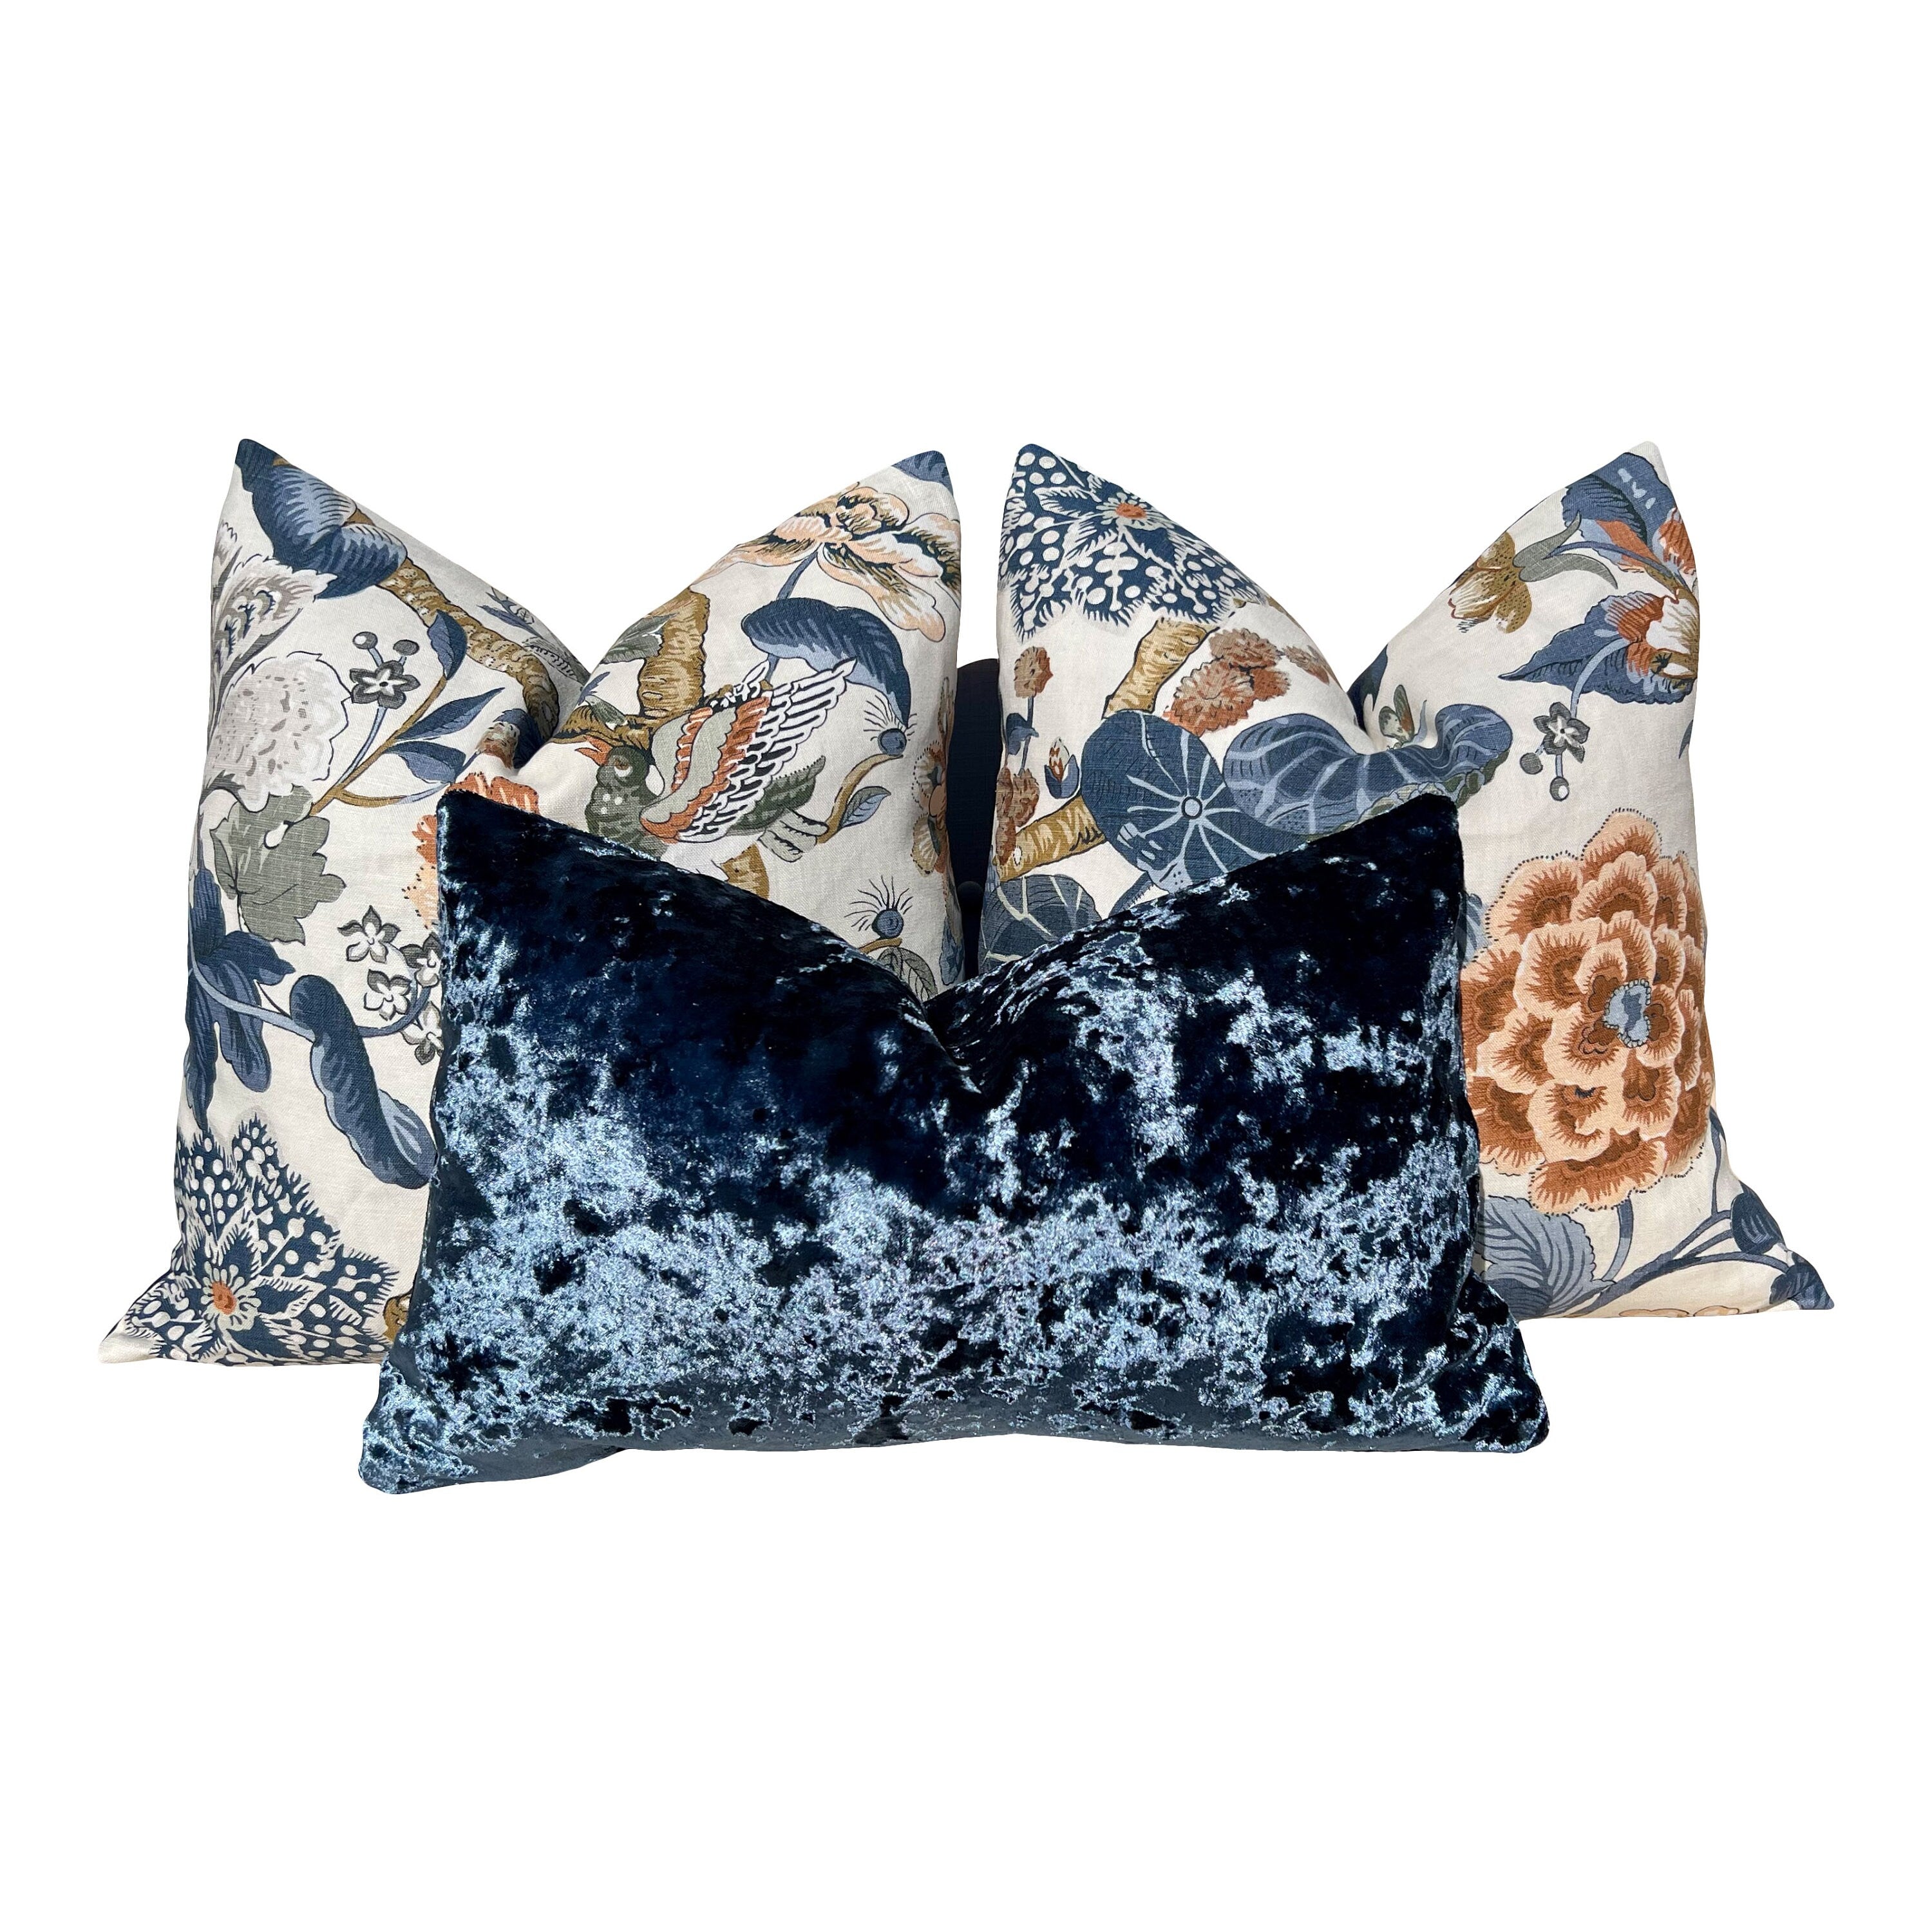 Hill Garden Linen Pillow in Brick and Navy. Designer Pillows, High End Pillows, Blue Floral Pillows, Bird Pillow Cover, Floral Bedroom Decor